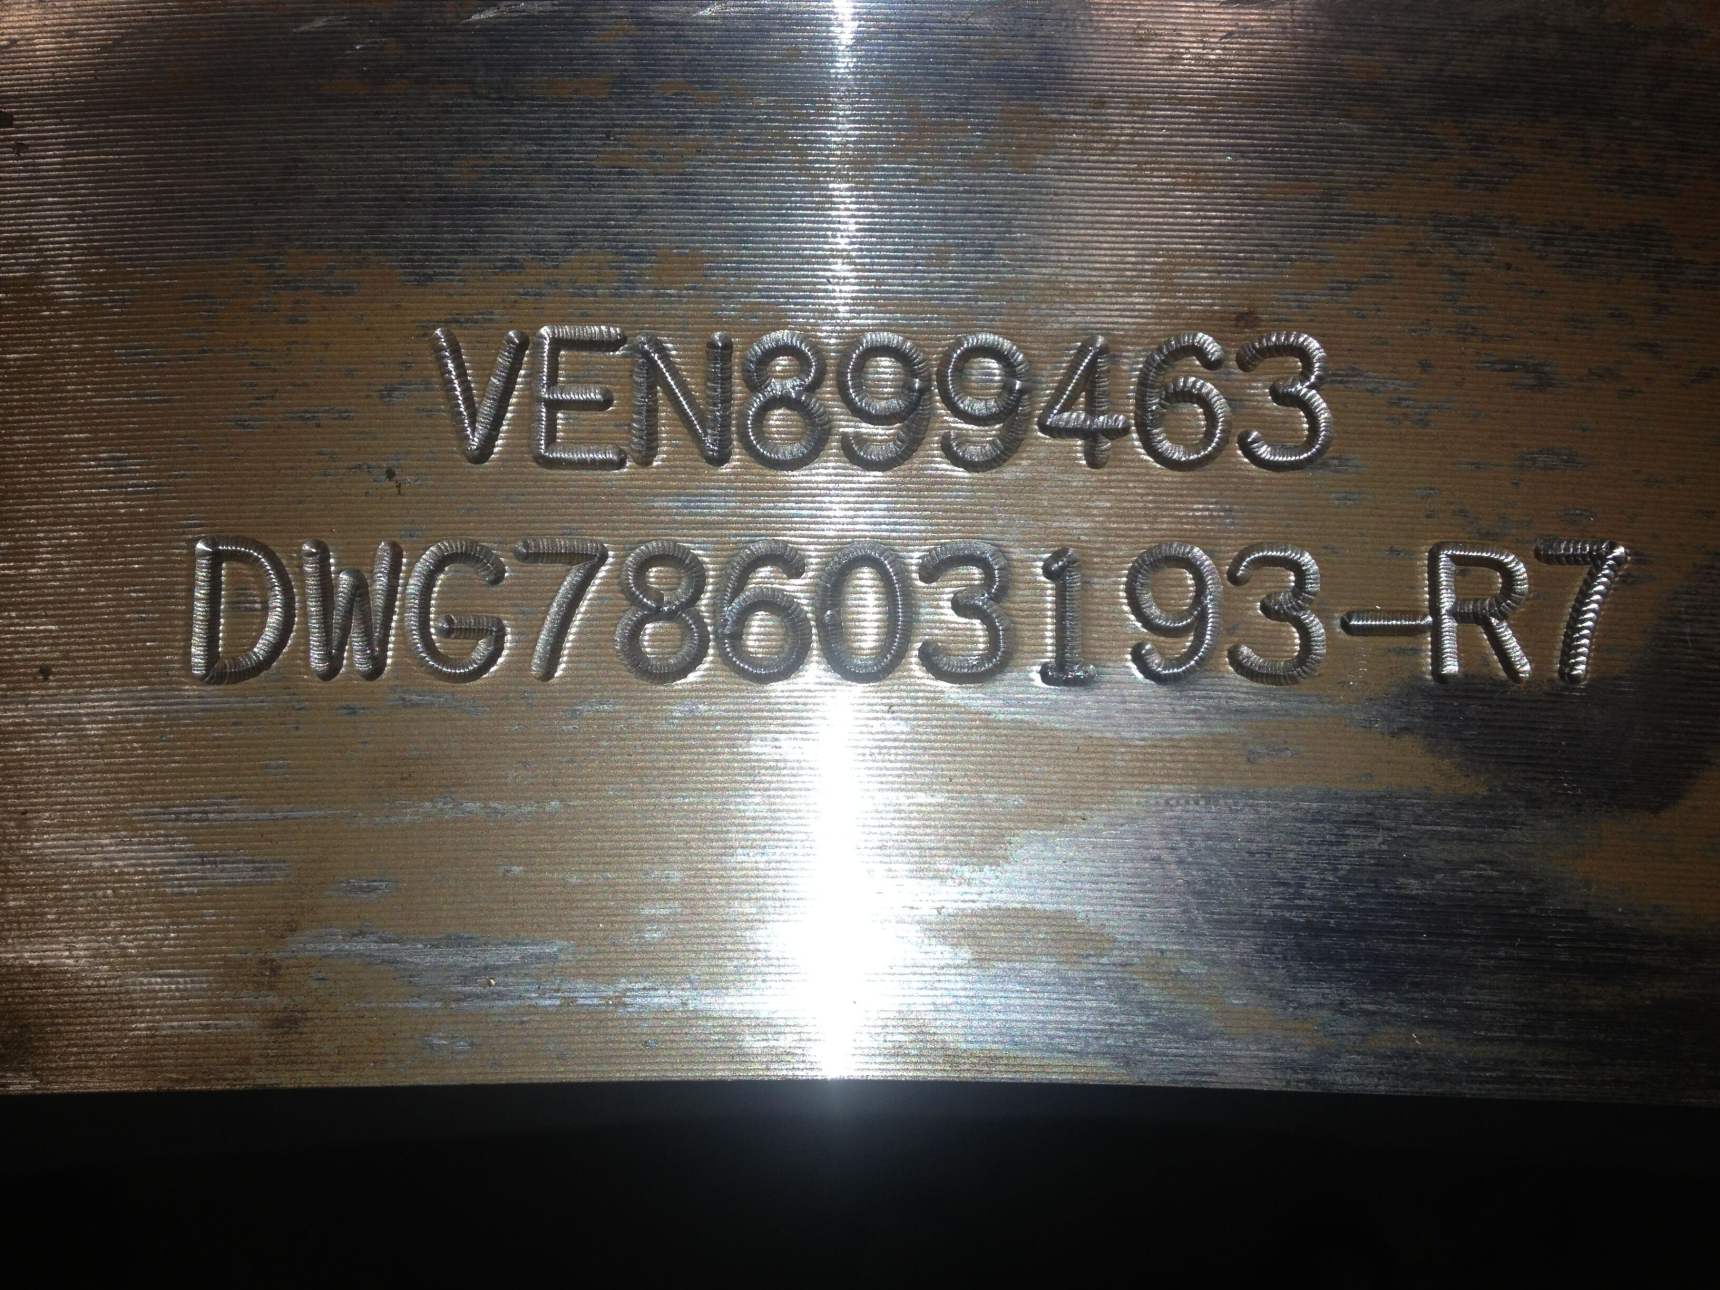 Handheld desktop metal plate battery portable handheld automatic CNC VIN marking point shot peening engraving machine